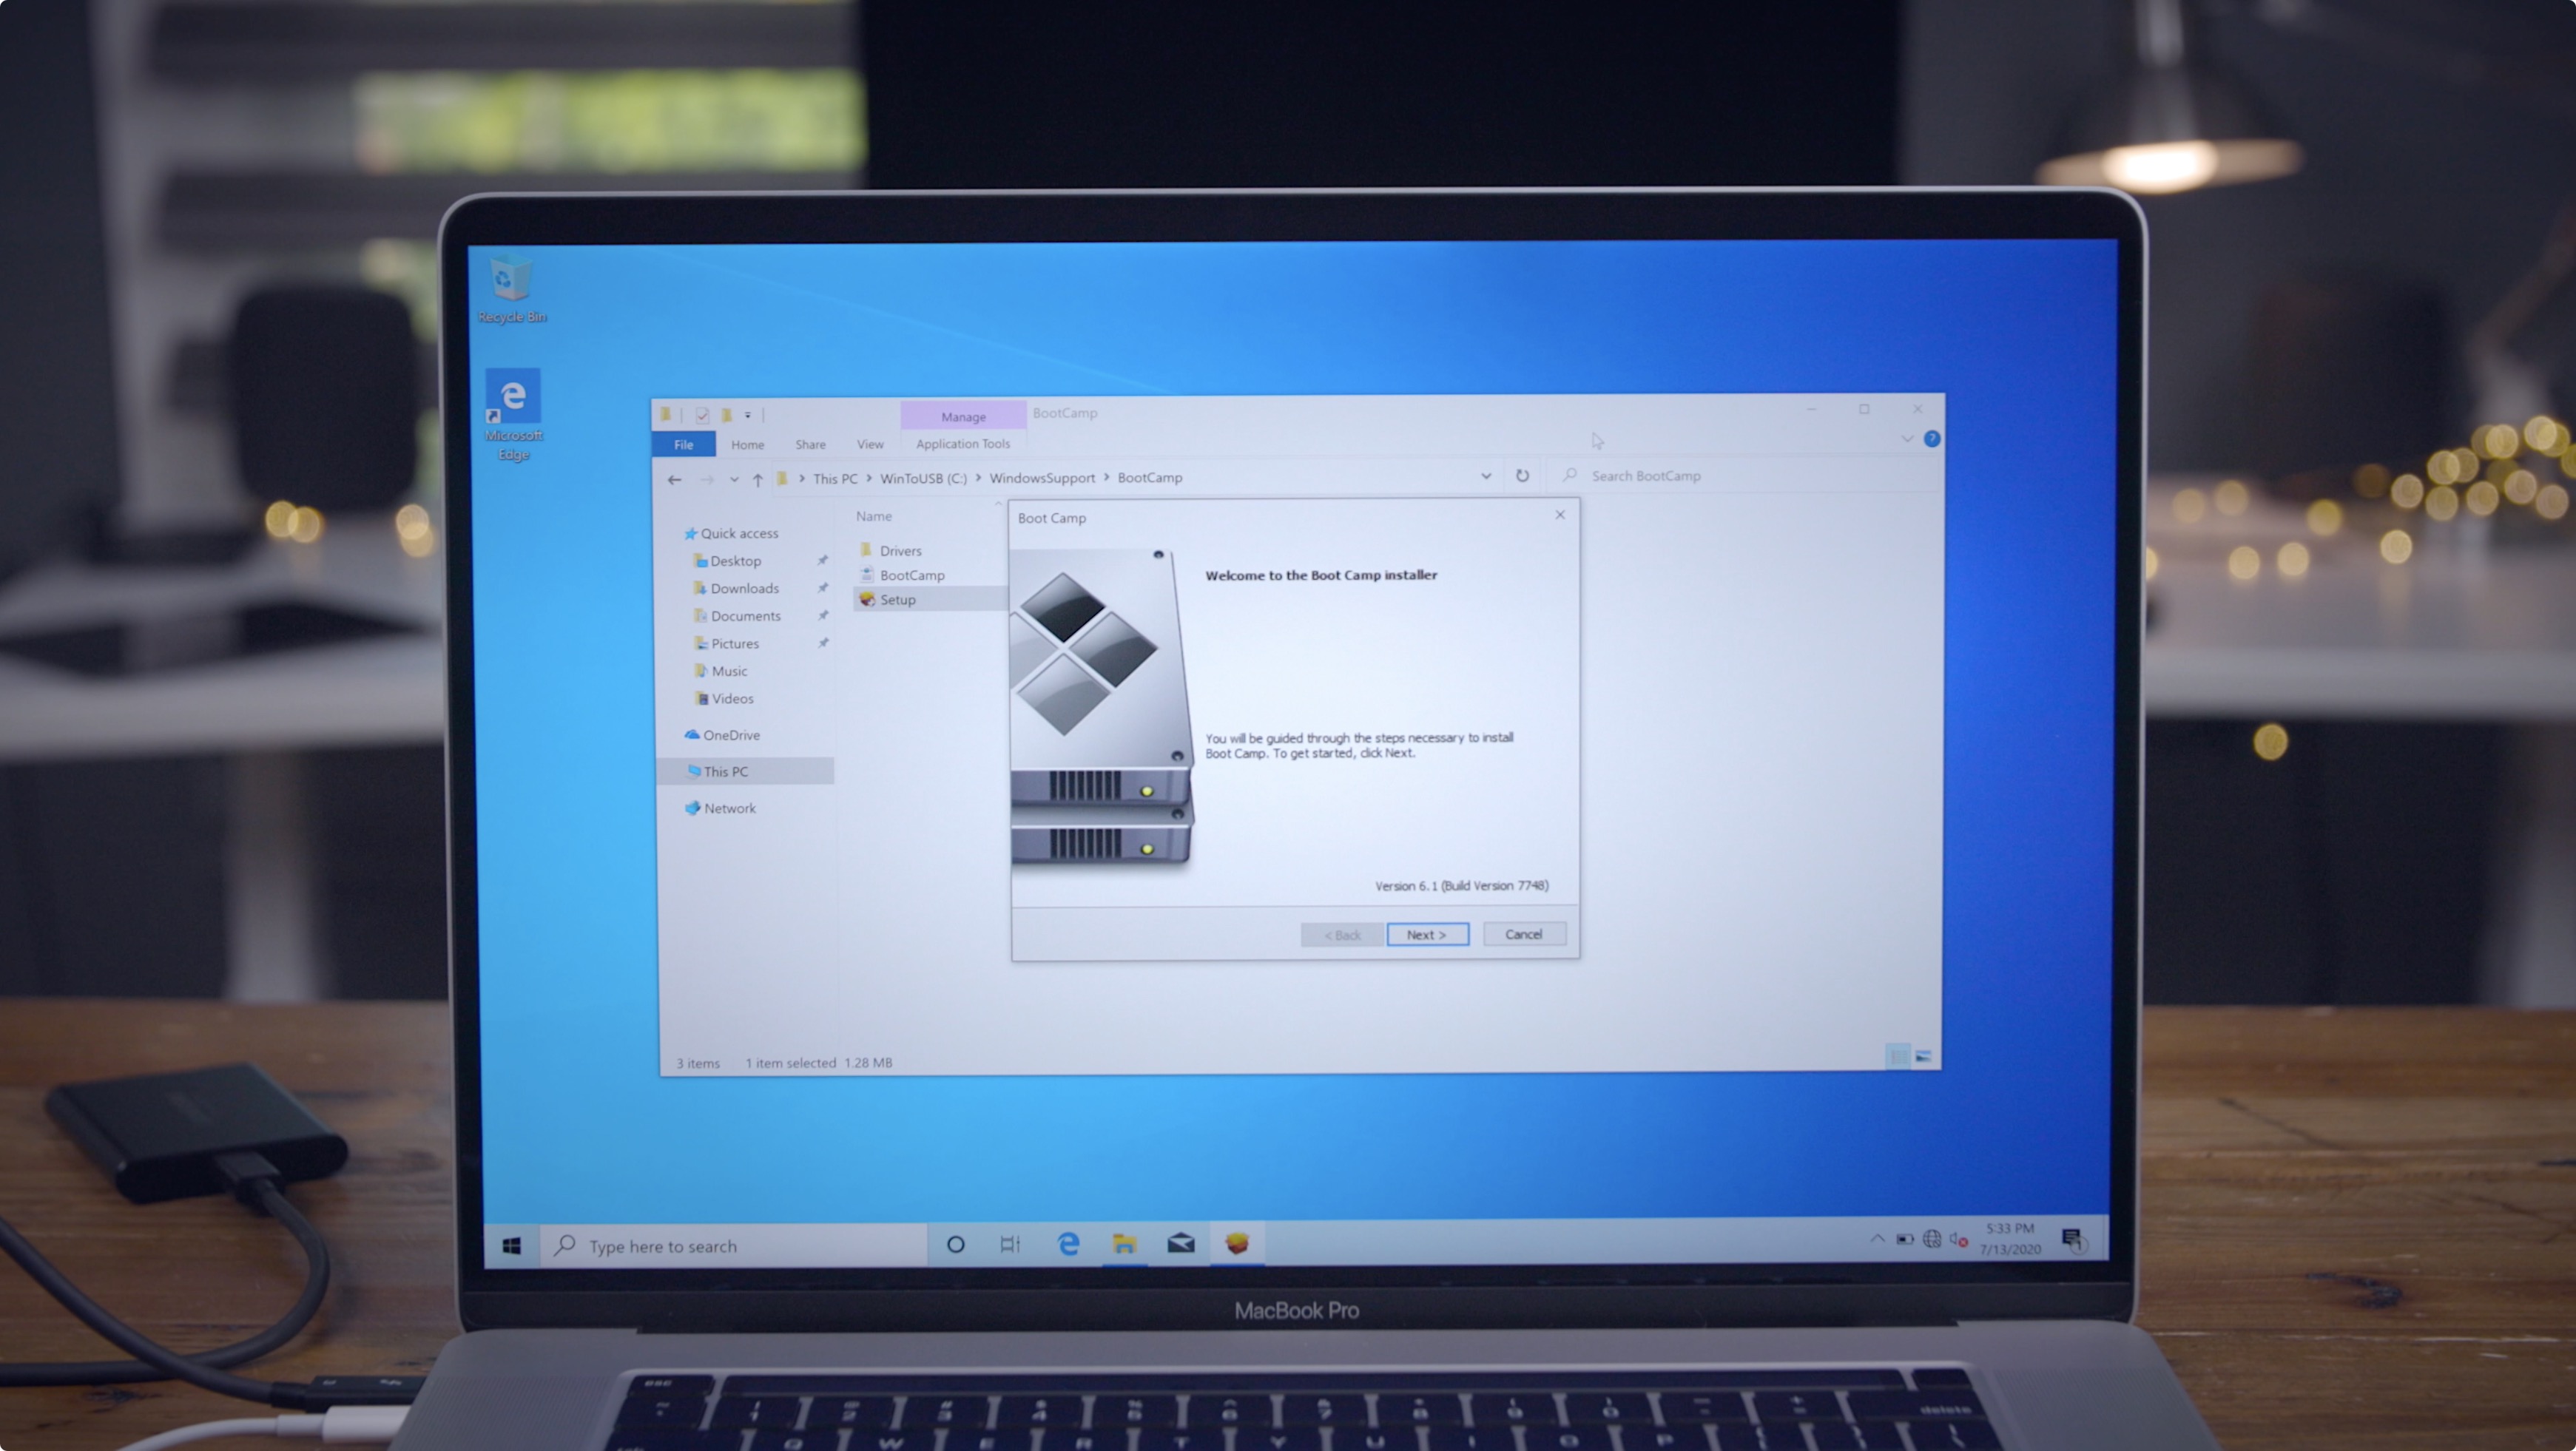 Install Windows 28 on Mac using an external SSD [Video] - 28to28Mac